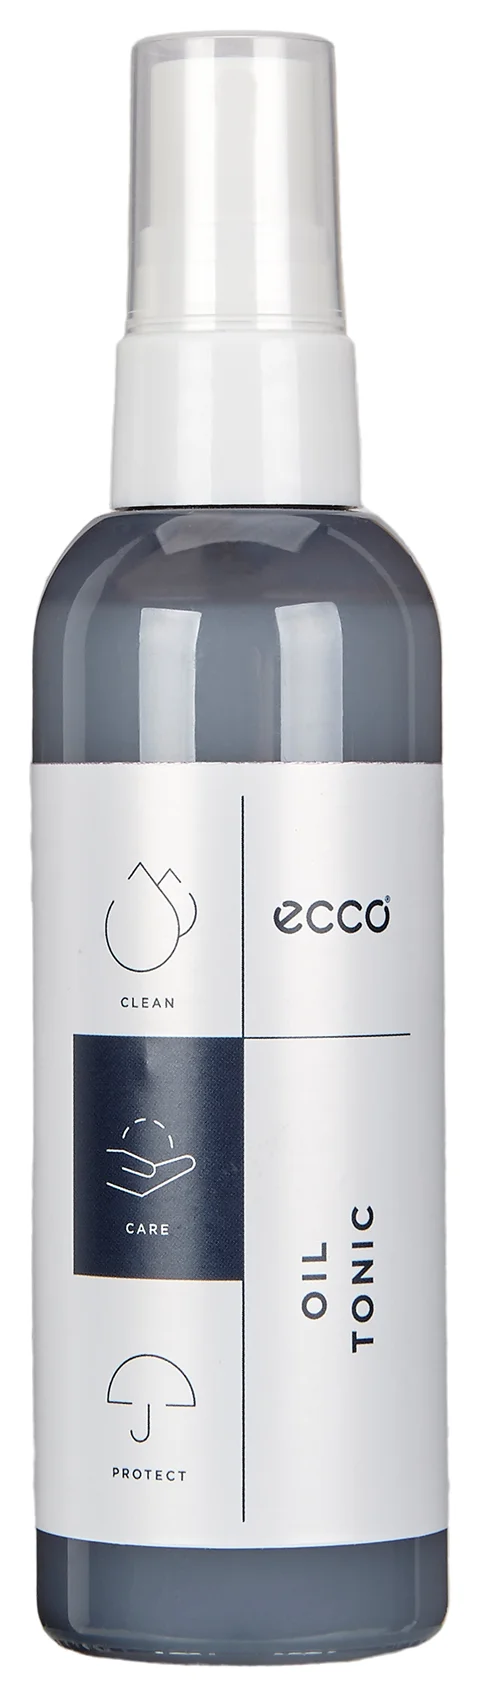 ECCO Oil Tonic - Transparente - Main